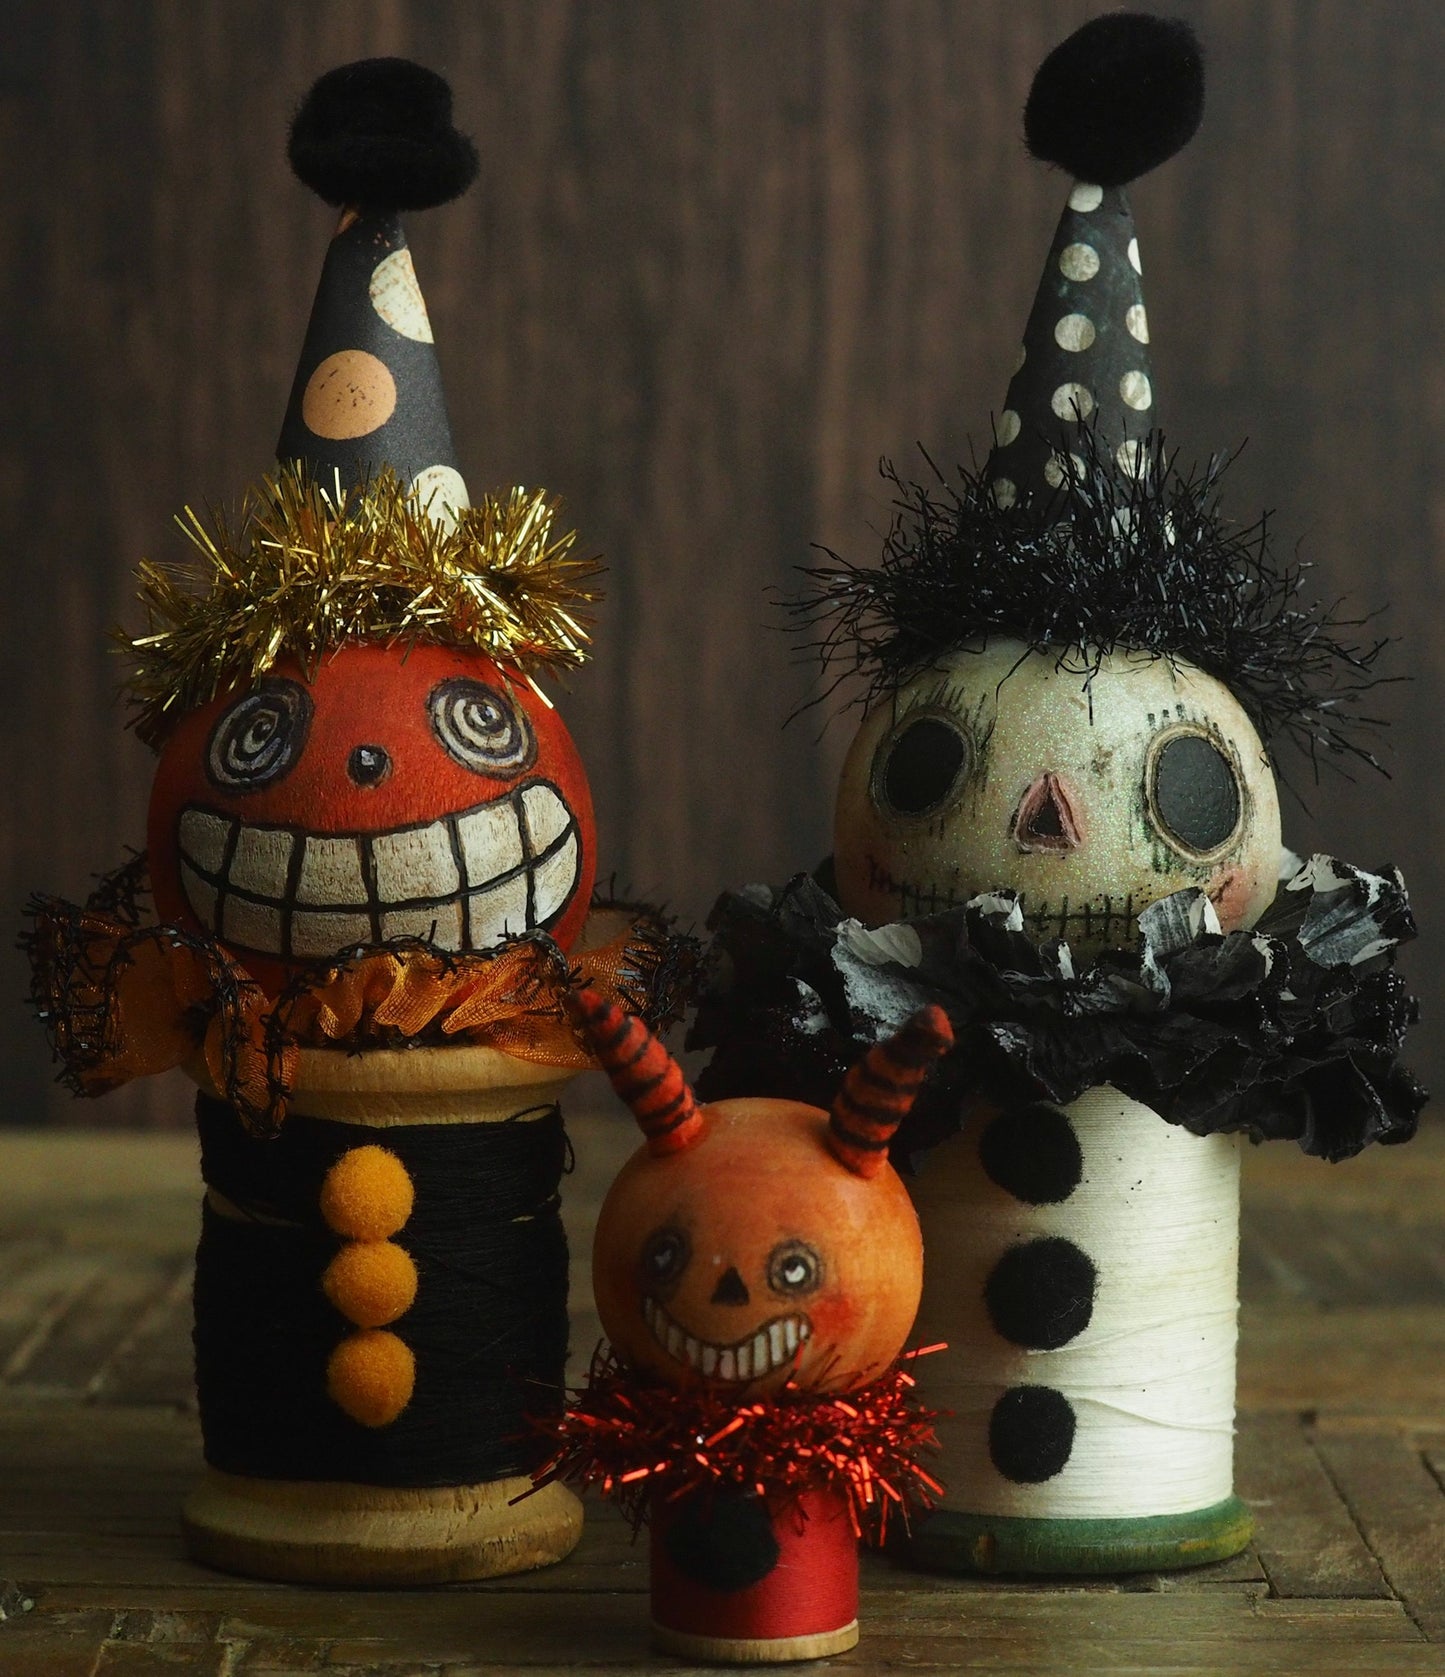 Dan, the happy go lucky jack-o-lantern pumpkin - Vintage thread spool kokeshi Halloween art doll by Danita, Miniature Dolls by Danita Art